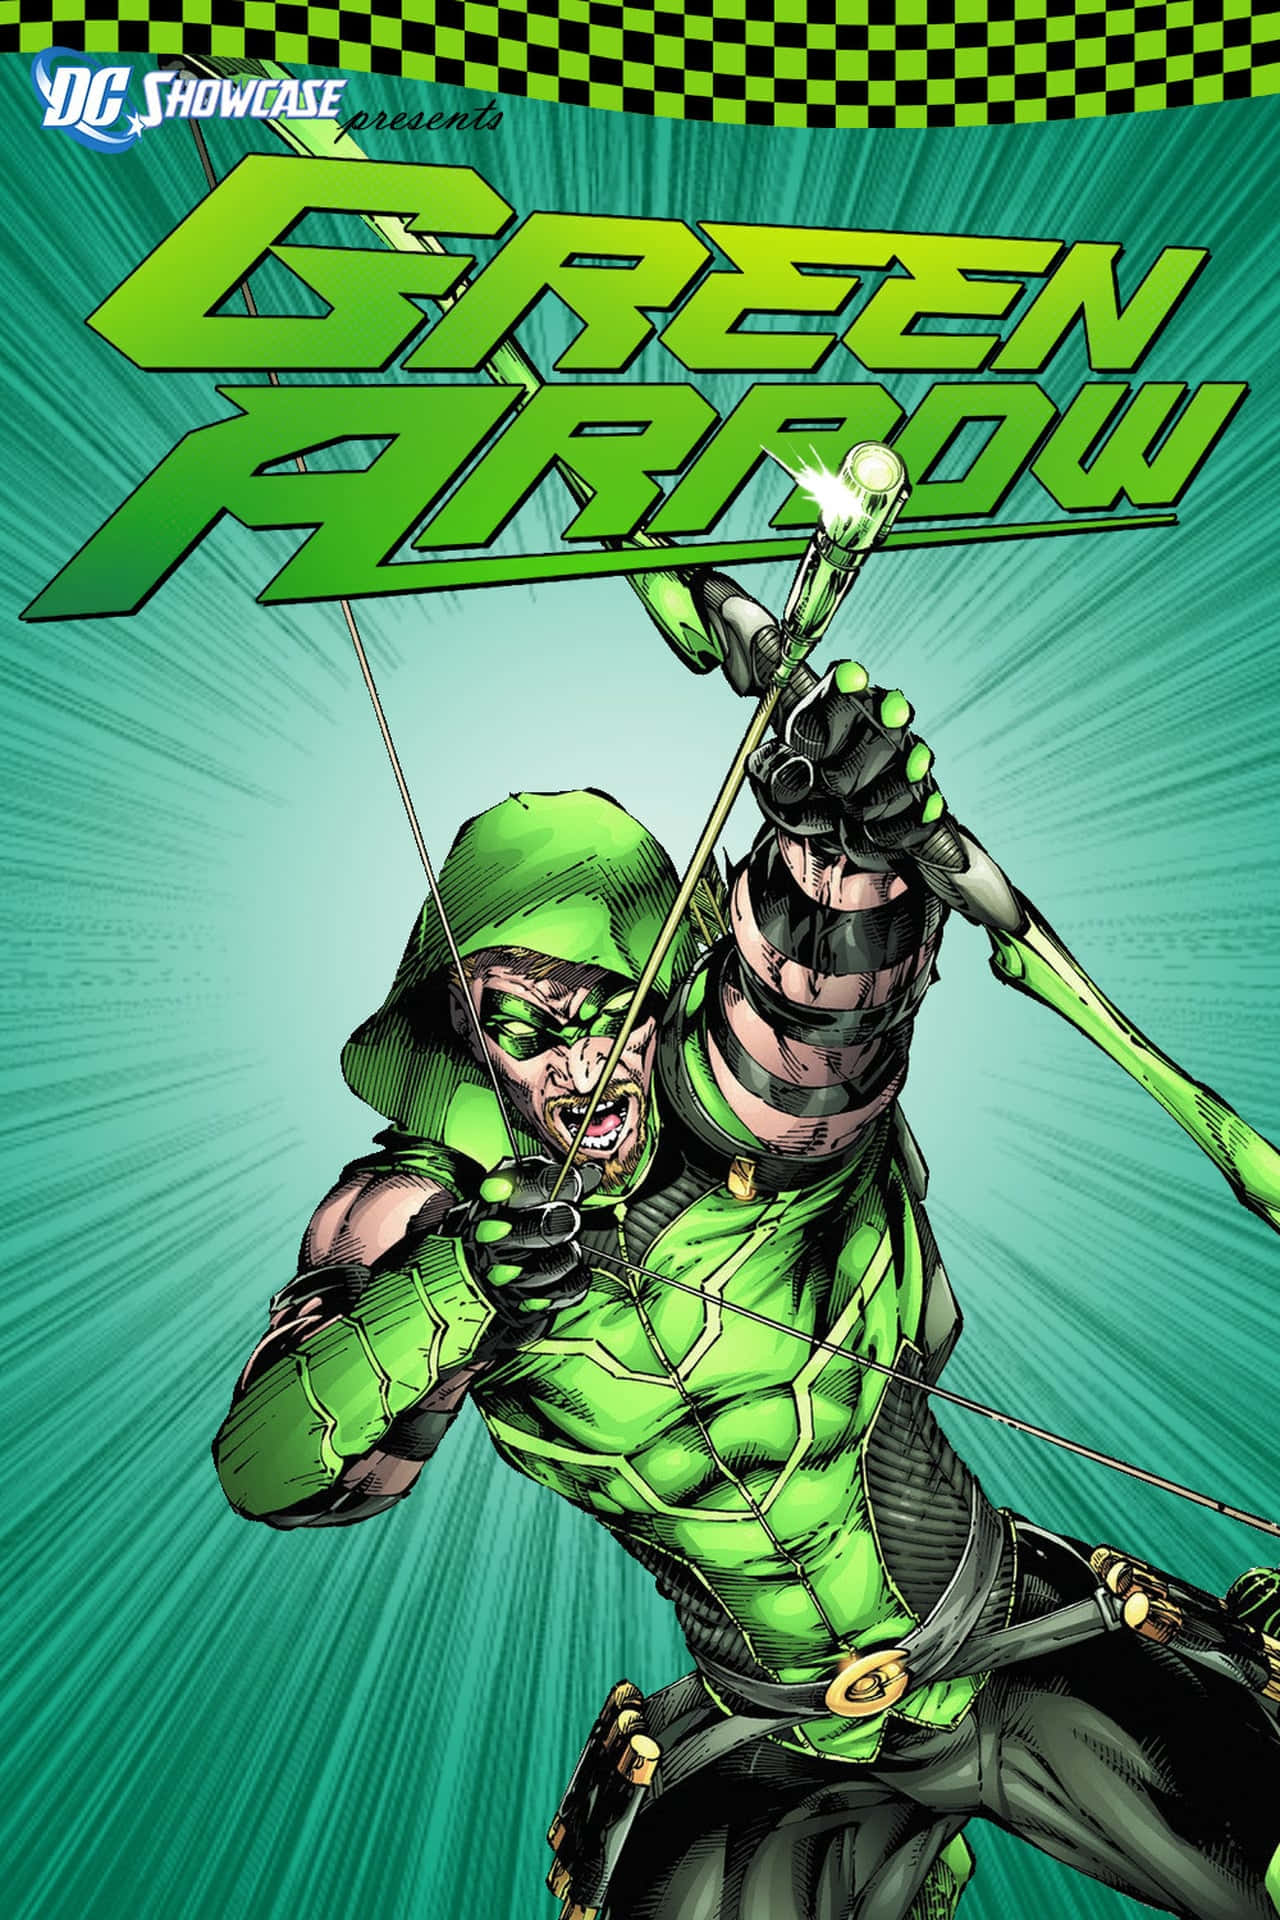 Vis din supermagt med Green Arrow Iphone tapet. Wallpaper